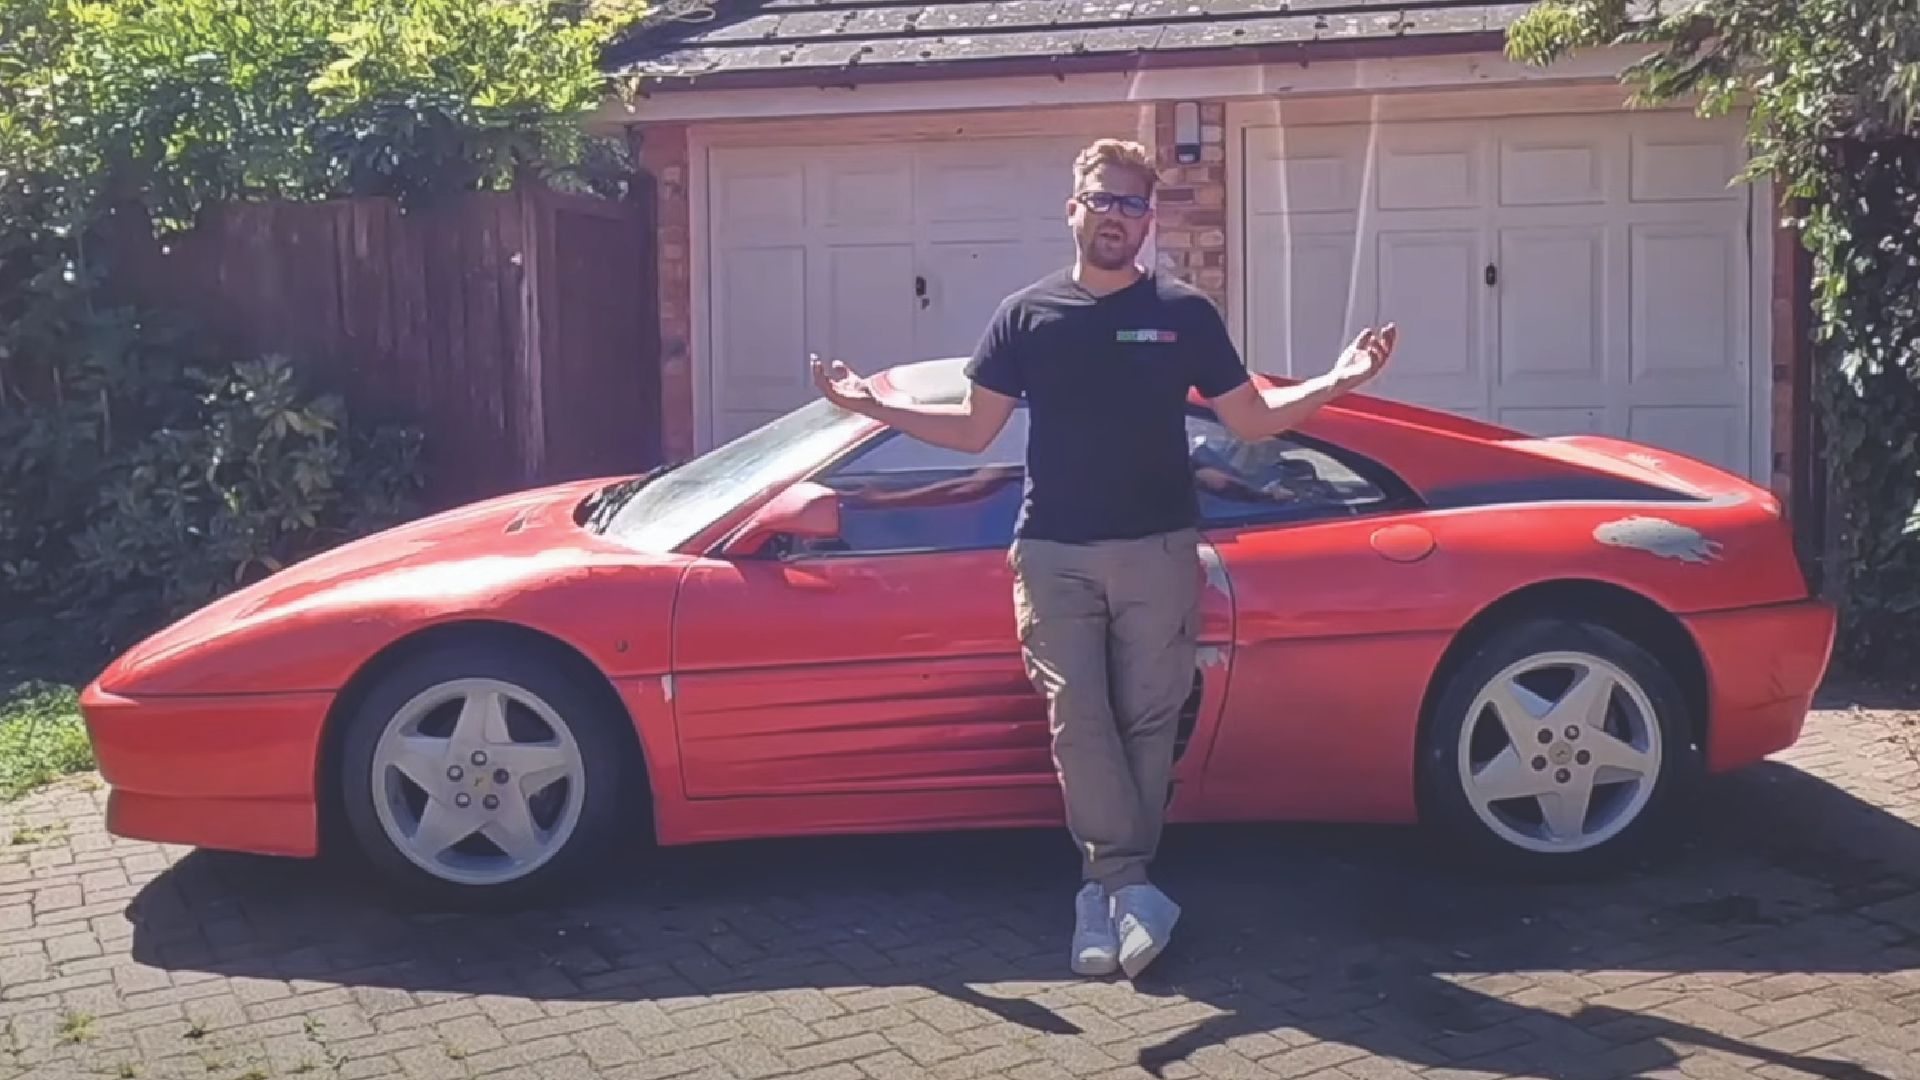 Youtuber Ratarossa with his red Ferrari 348